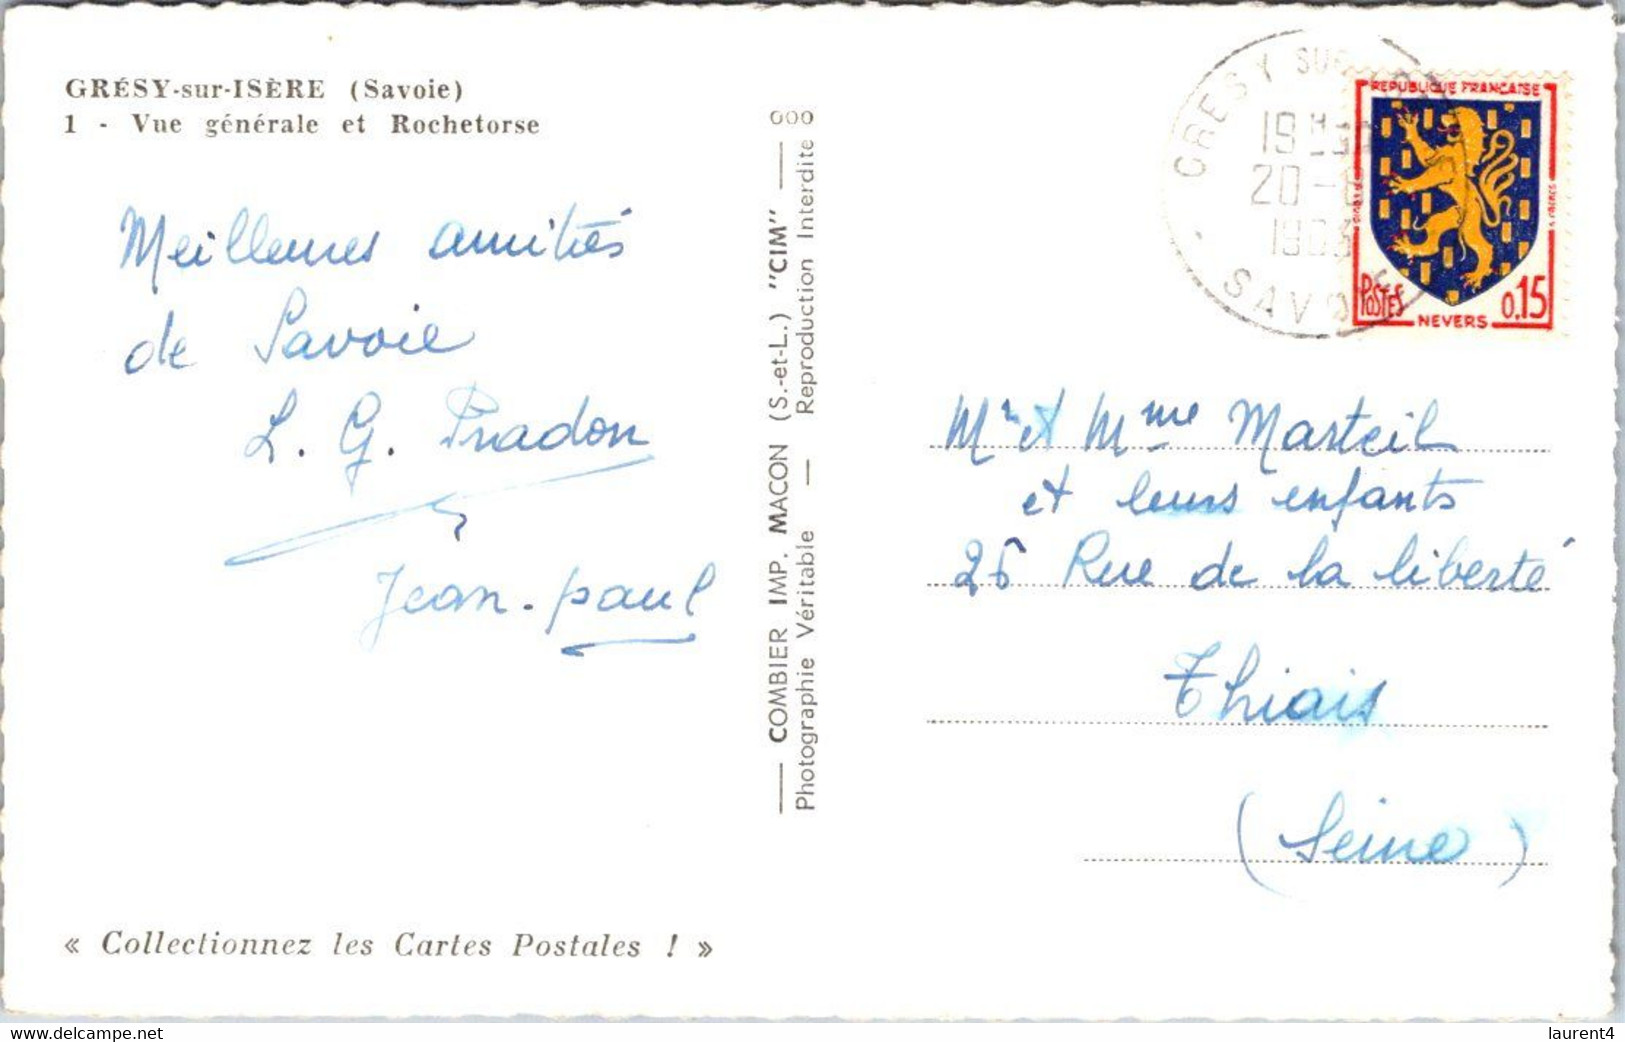 (4 M 6) OLDER - FRANCE (b/w)  Posted 1963  - Grésy-sur-Isère - Gresy Sur Isere